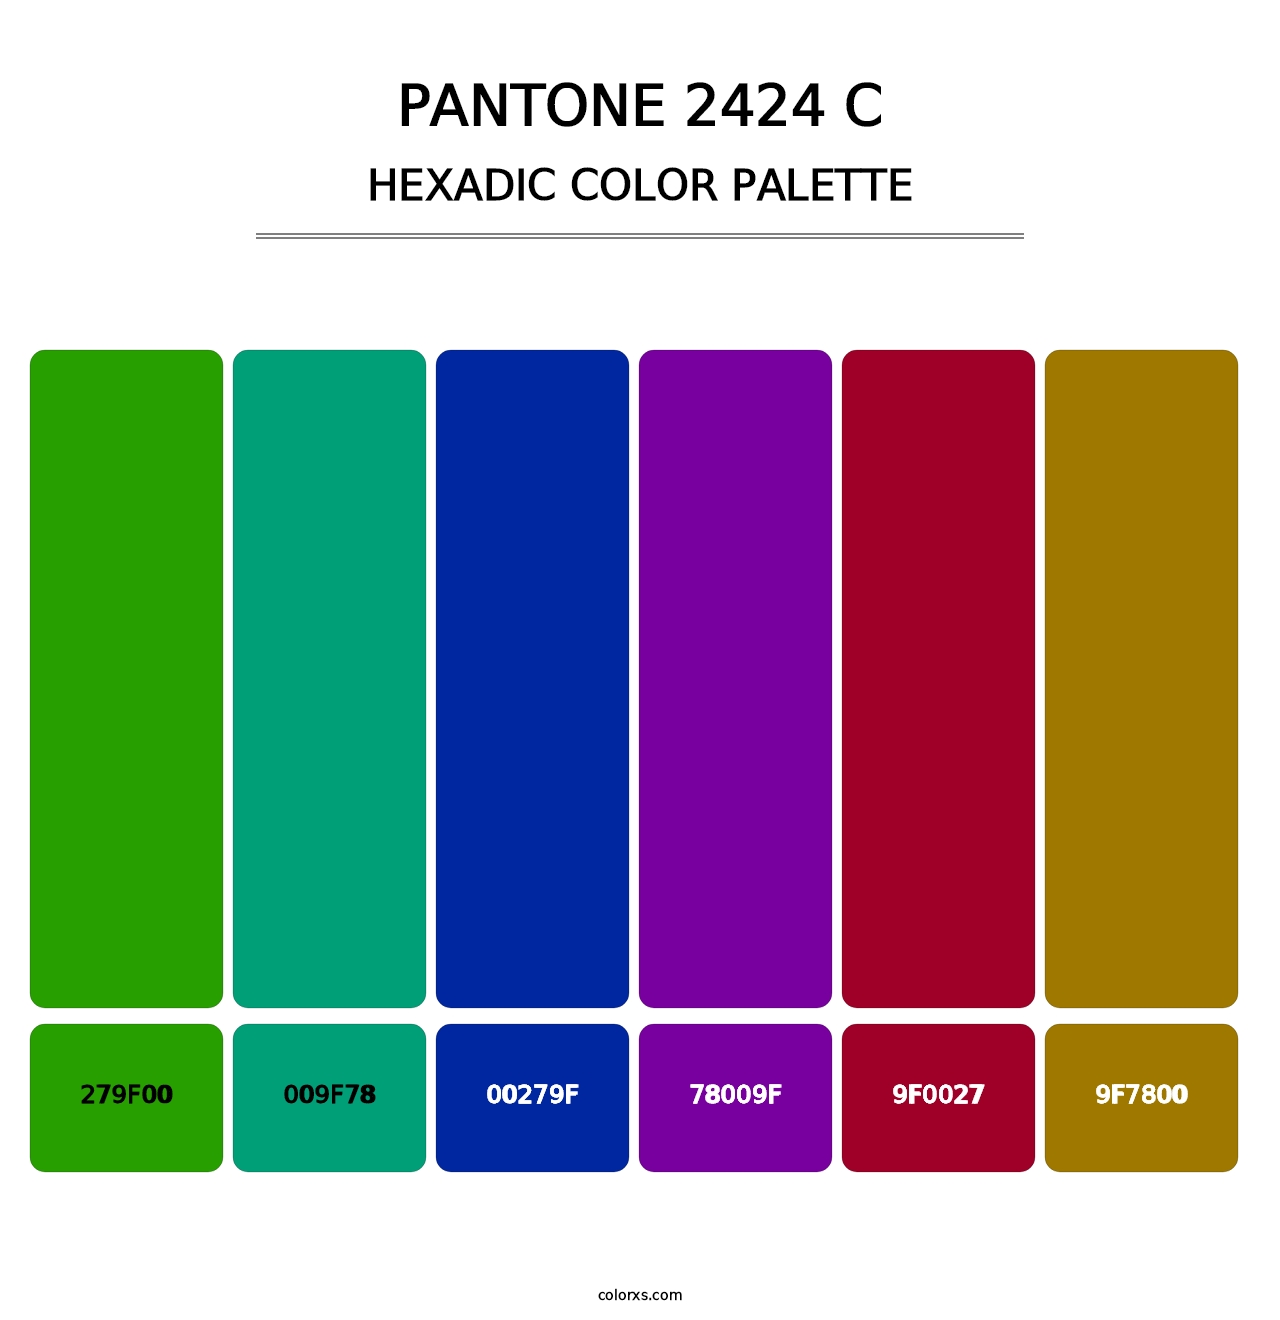 PANTONE 2424 C - Hexadic Color Palette